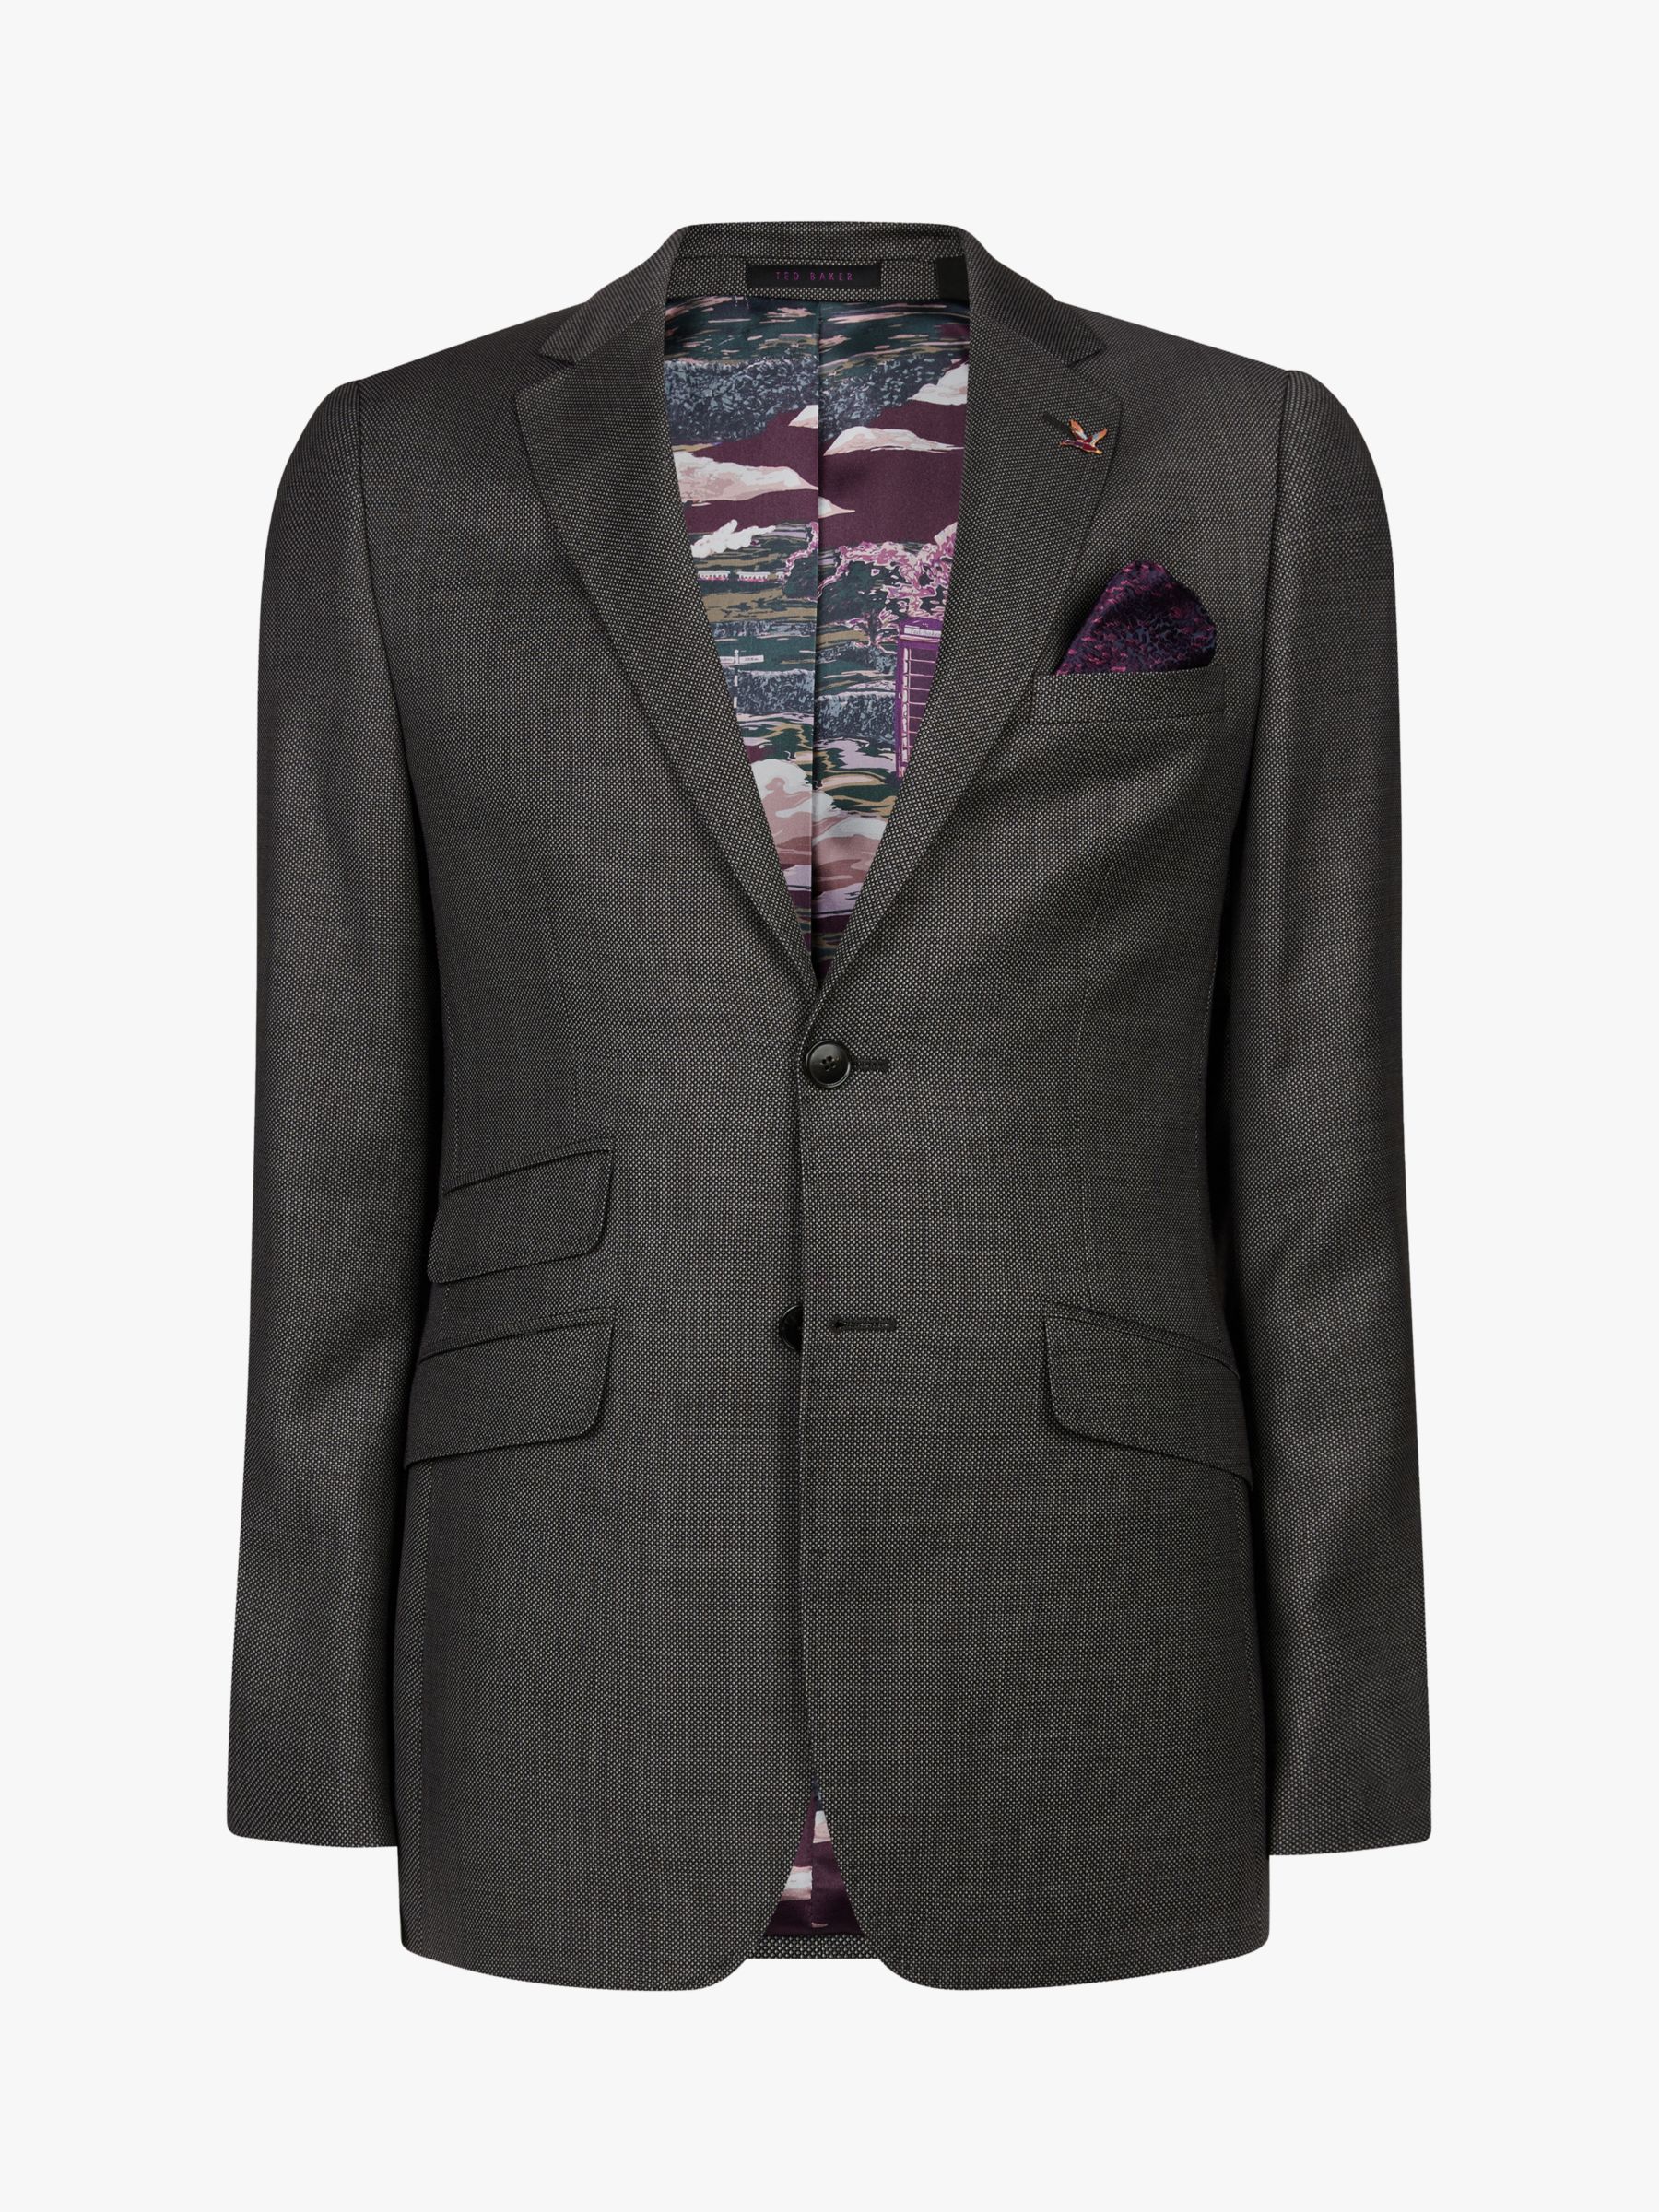 Ted Baker Bevlee Birdseye Wool Suit Jacket, Charcoal